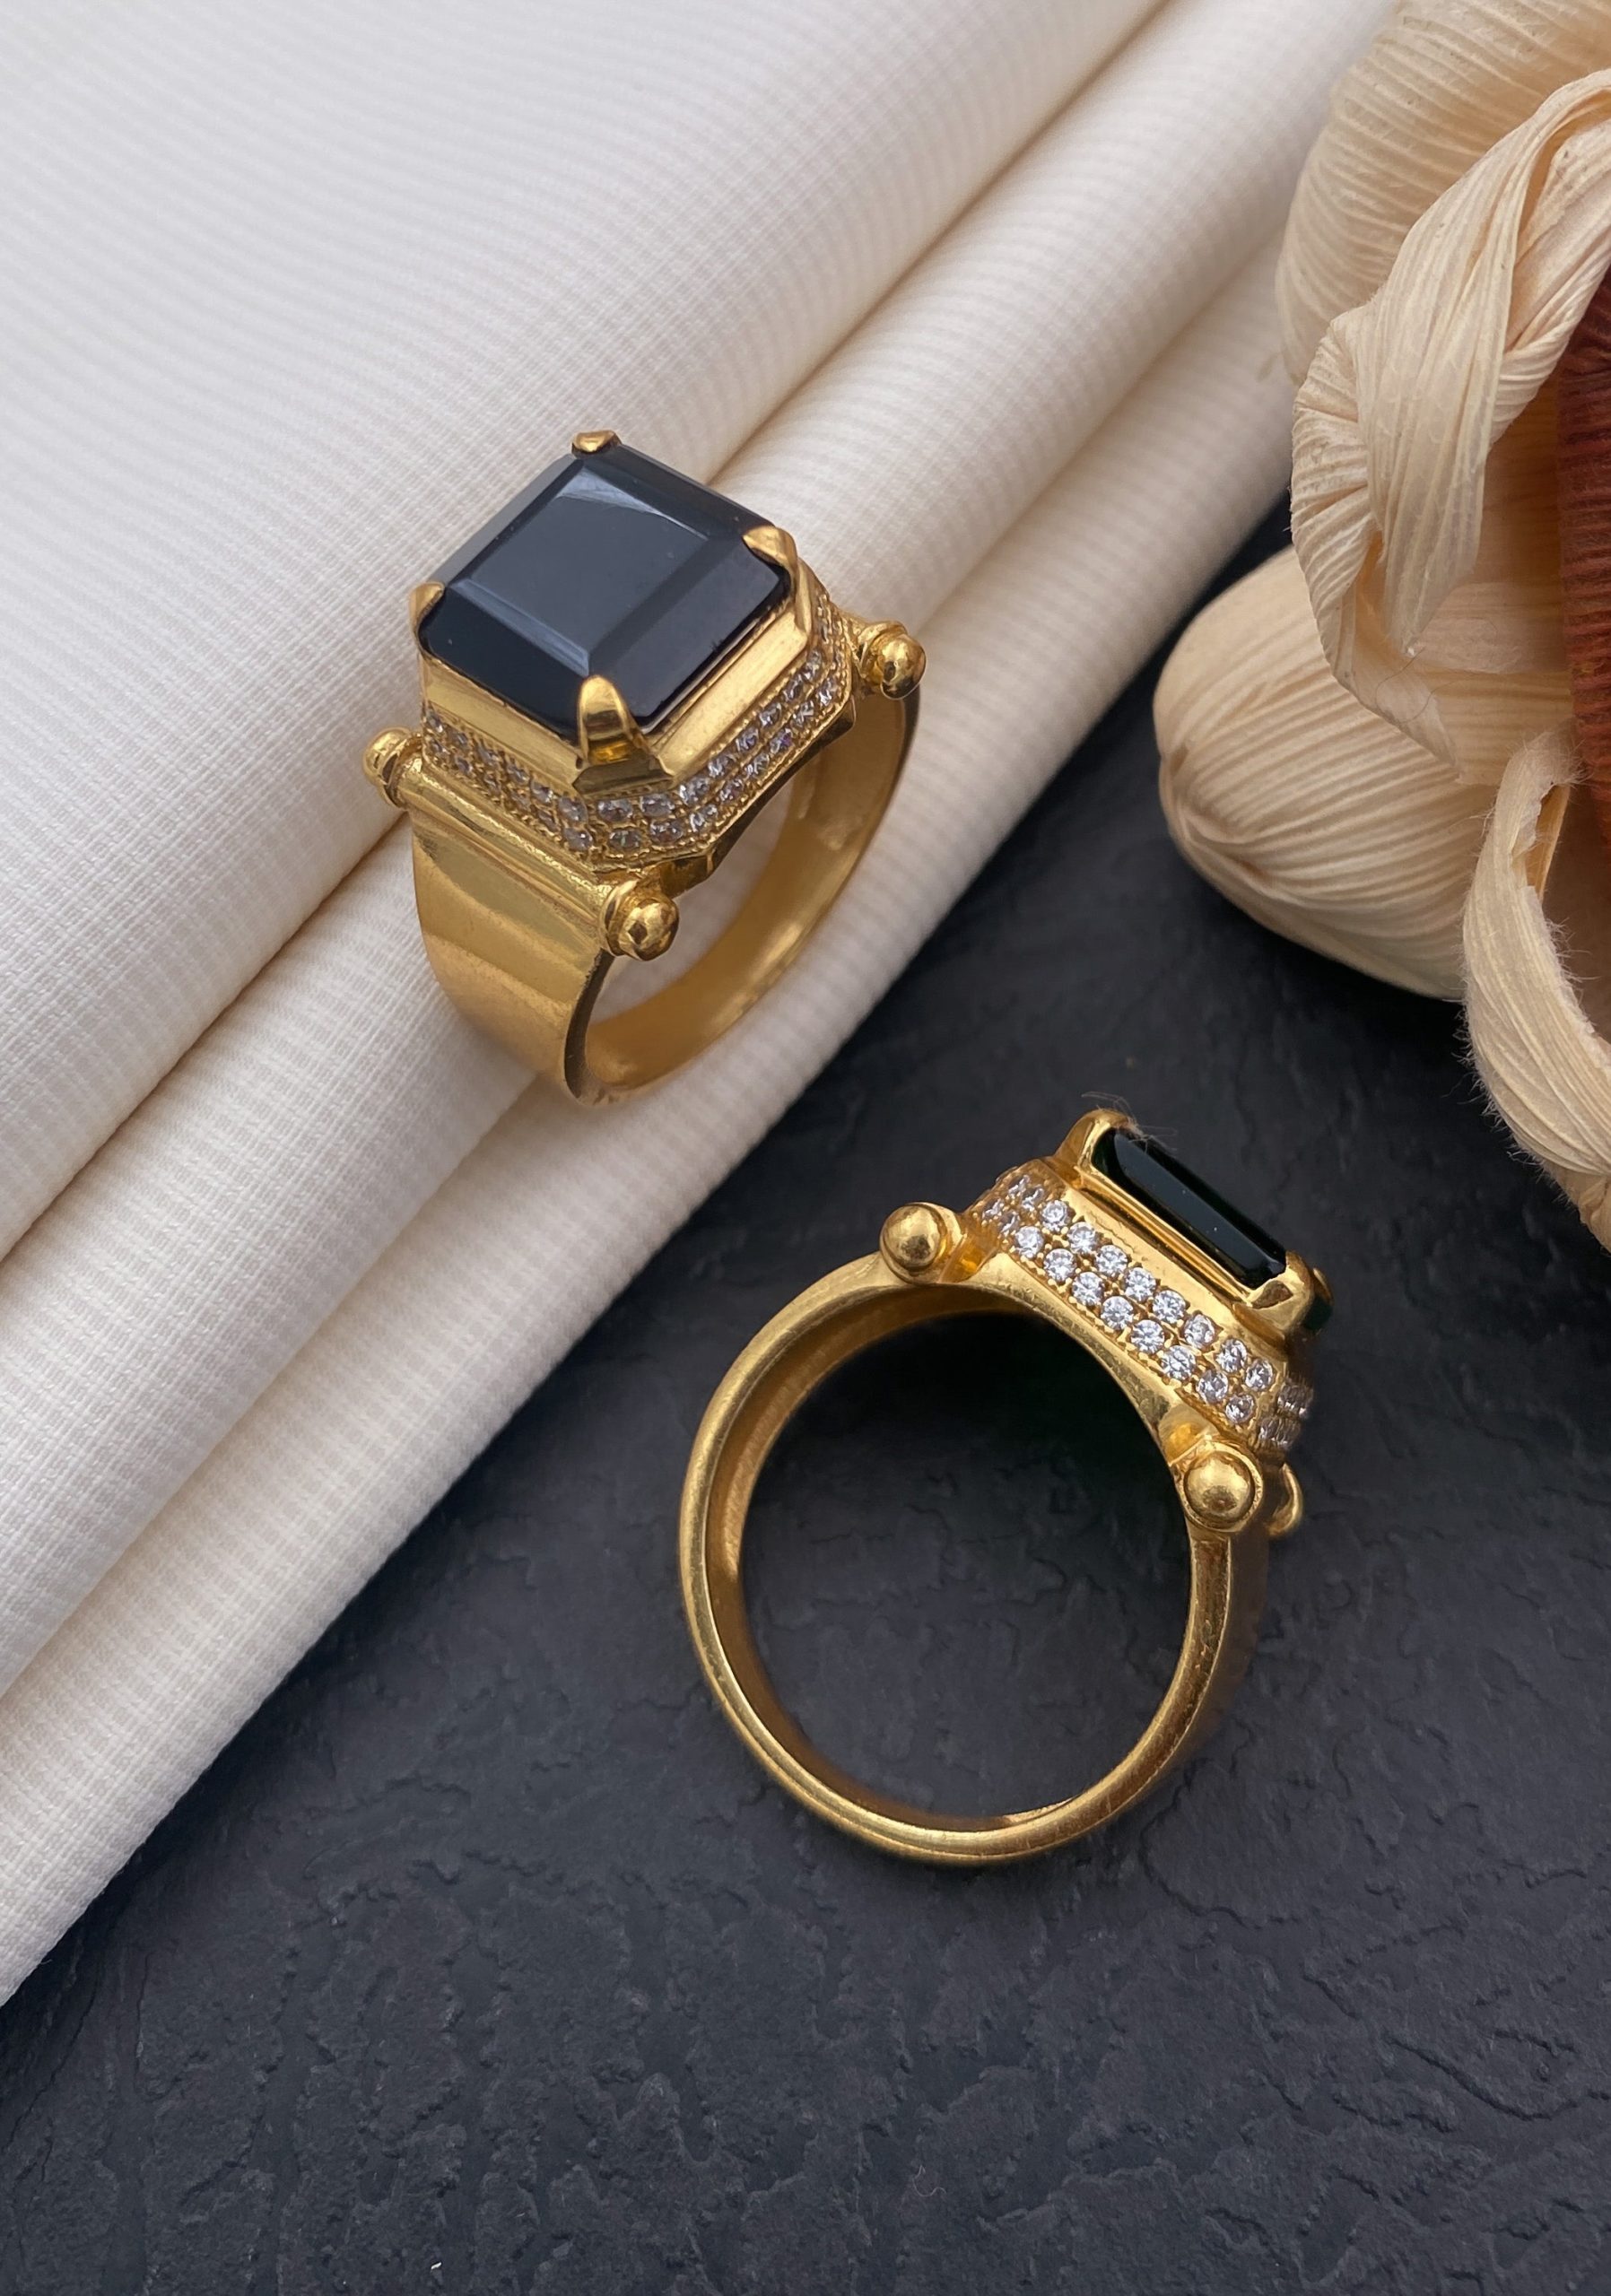 Emerald and white sapphire green square ring | Fashion jewelry, Fashion  rings, Diamond jewelry designs